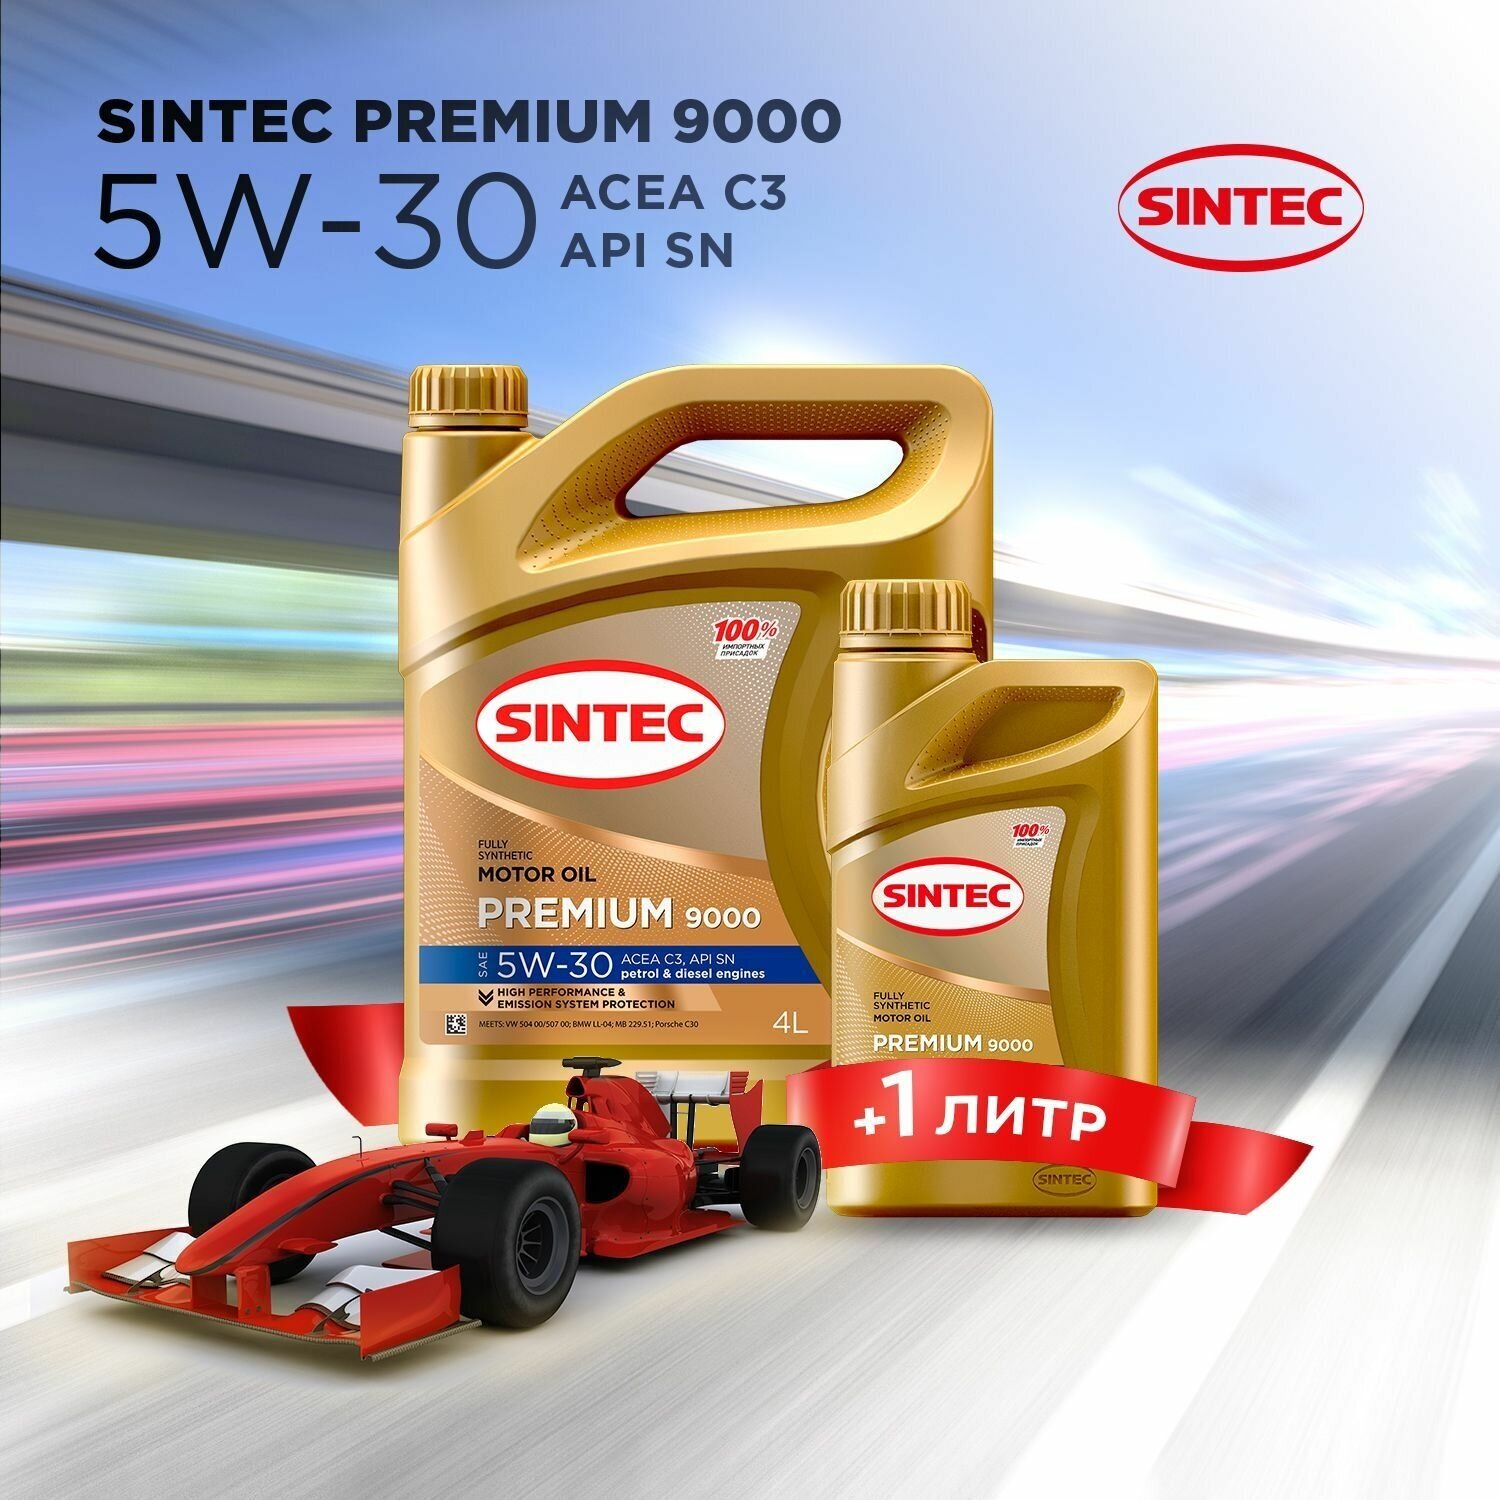 Sintec PREMIUM 9000 SAE 5W-30 API SN ACEA С3 Акция 5л по цене 4л (600279)